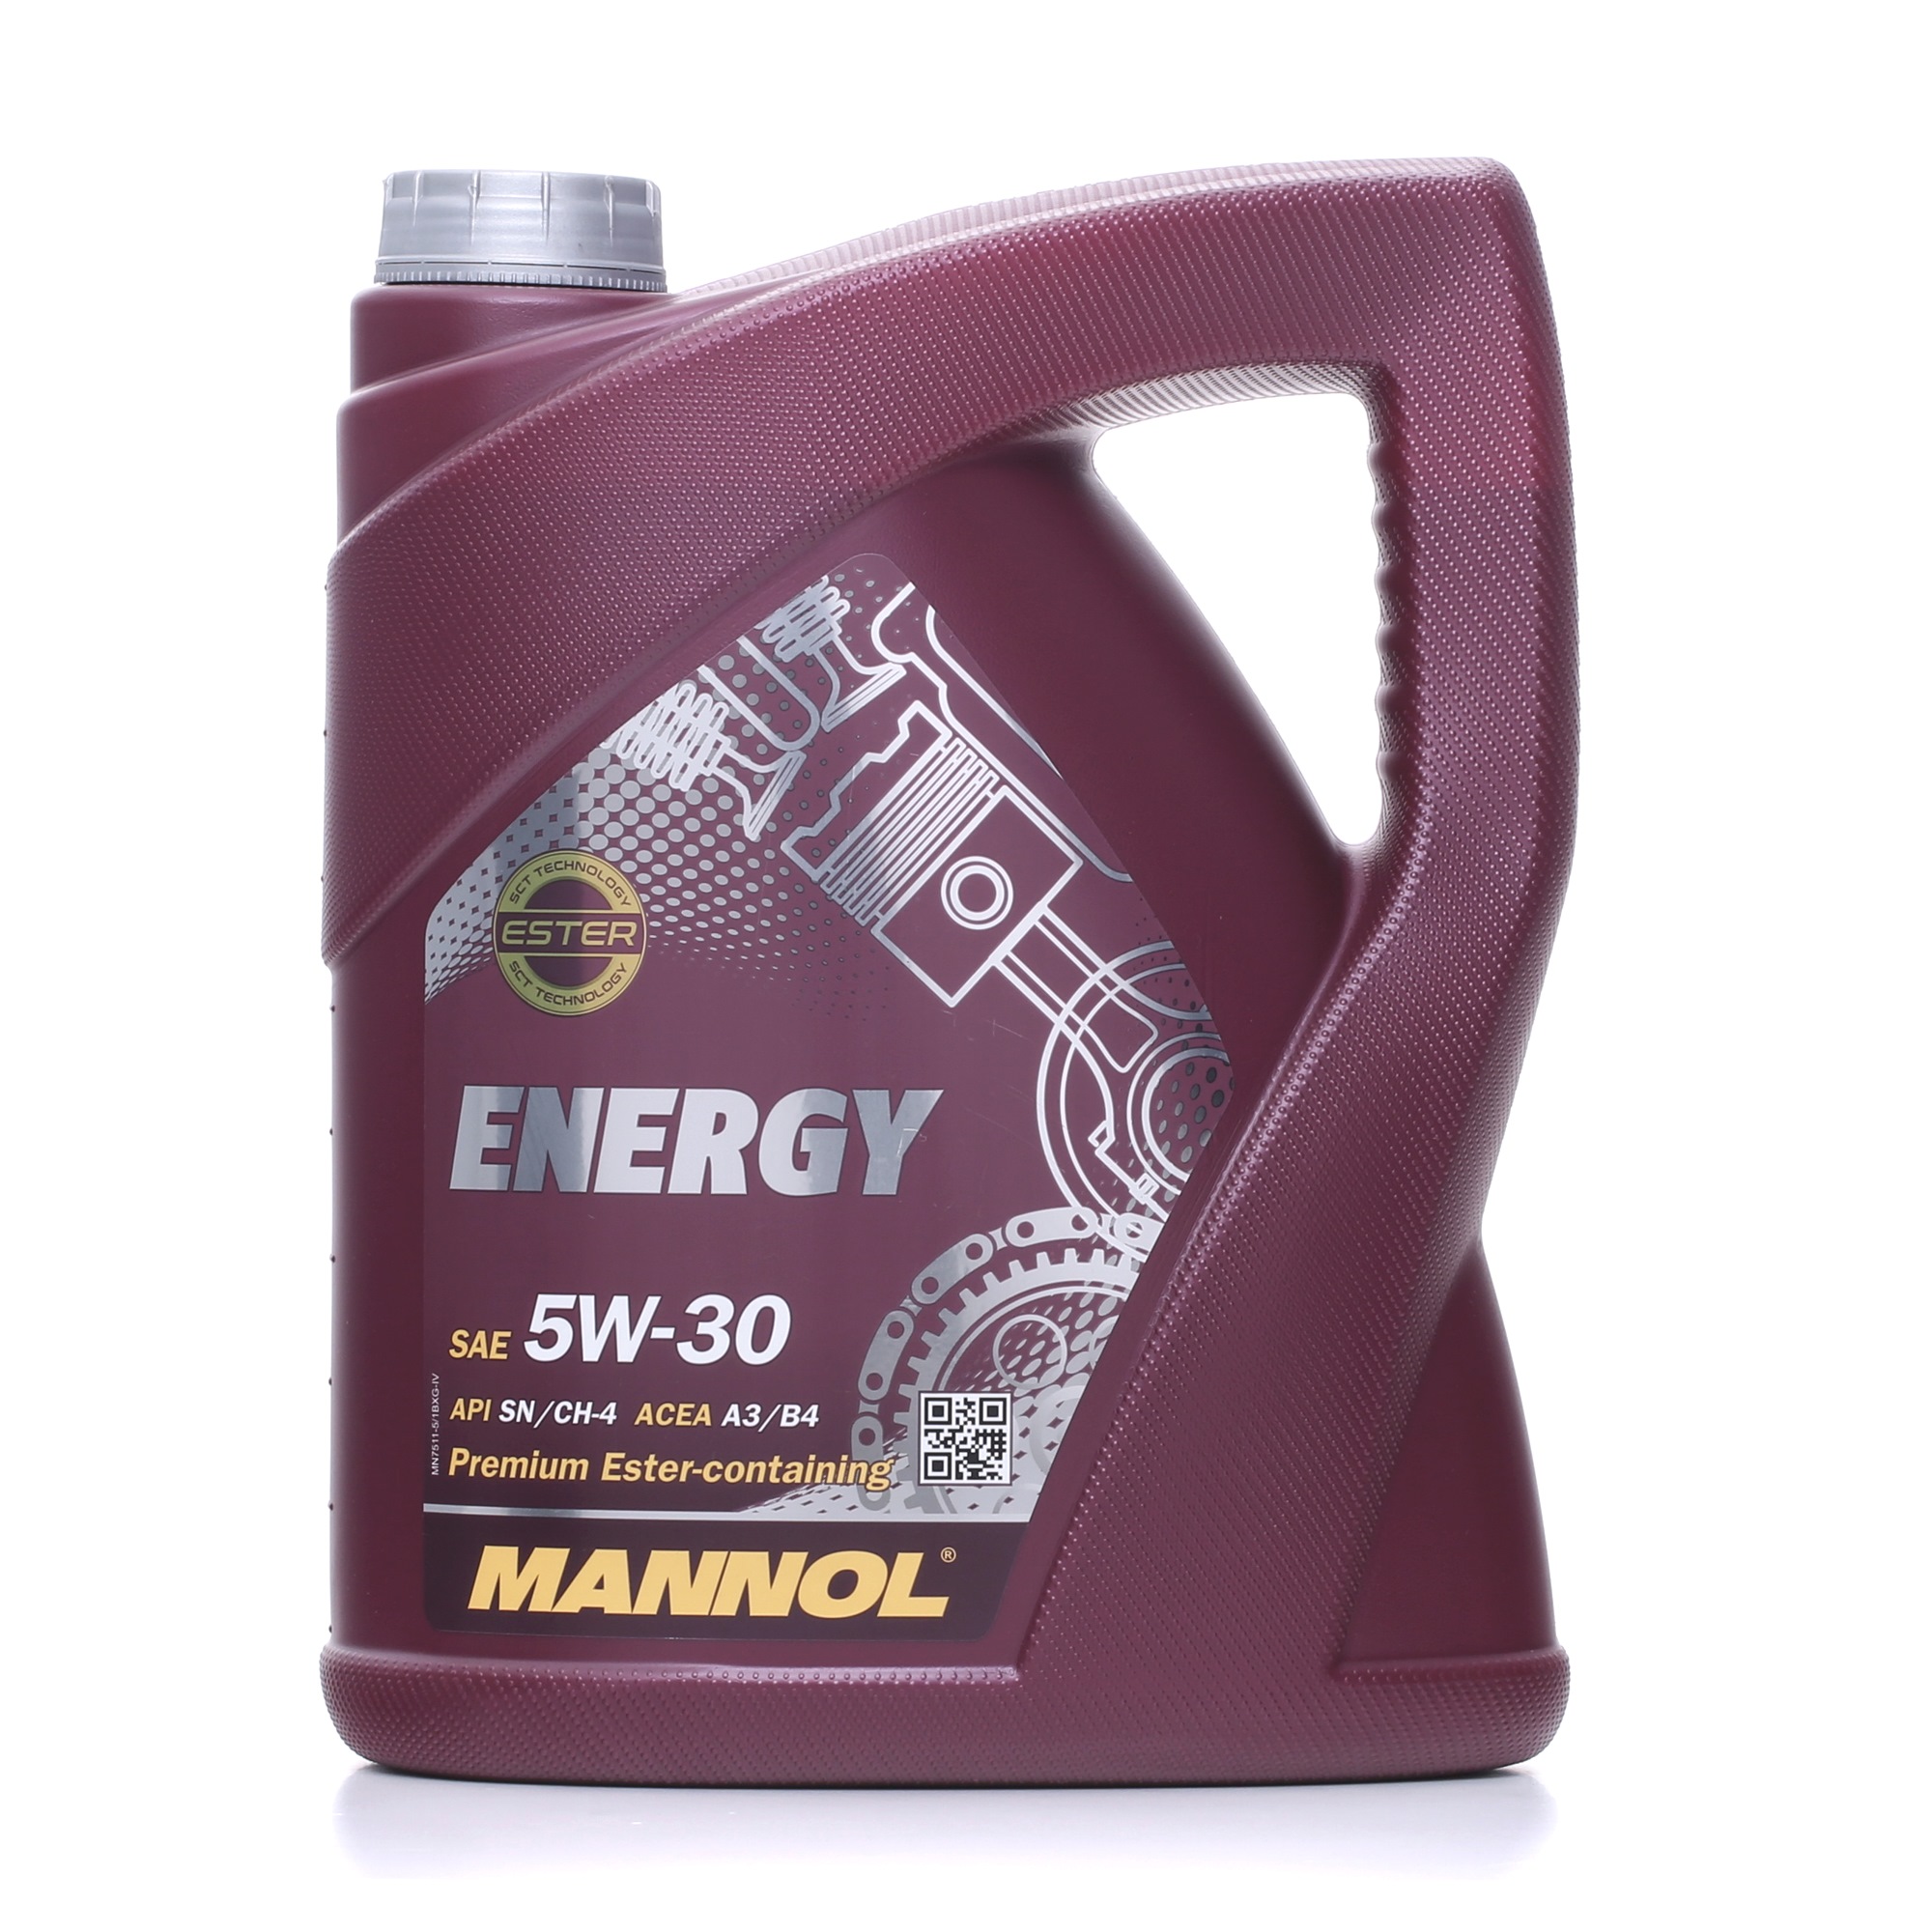 MN7511-5 MANNOL ENERGY 5W-30, 5l, Teilsynthetiköl Motoröl MN7511-5 günstig kaufen